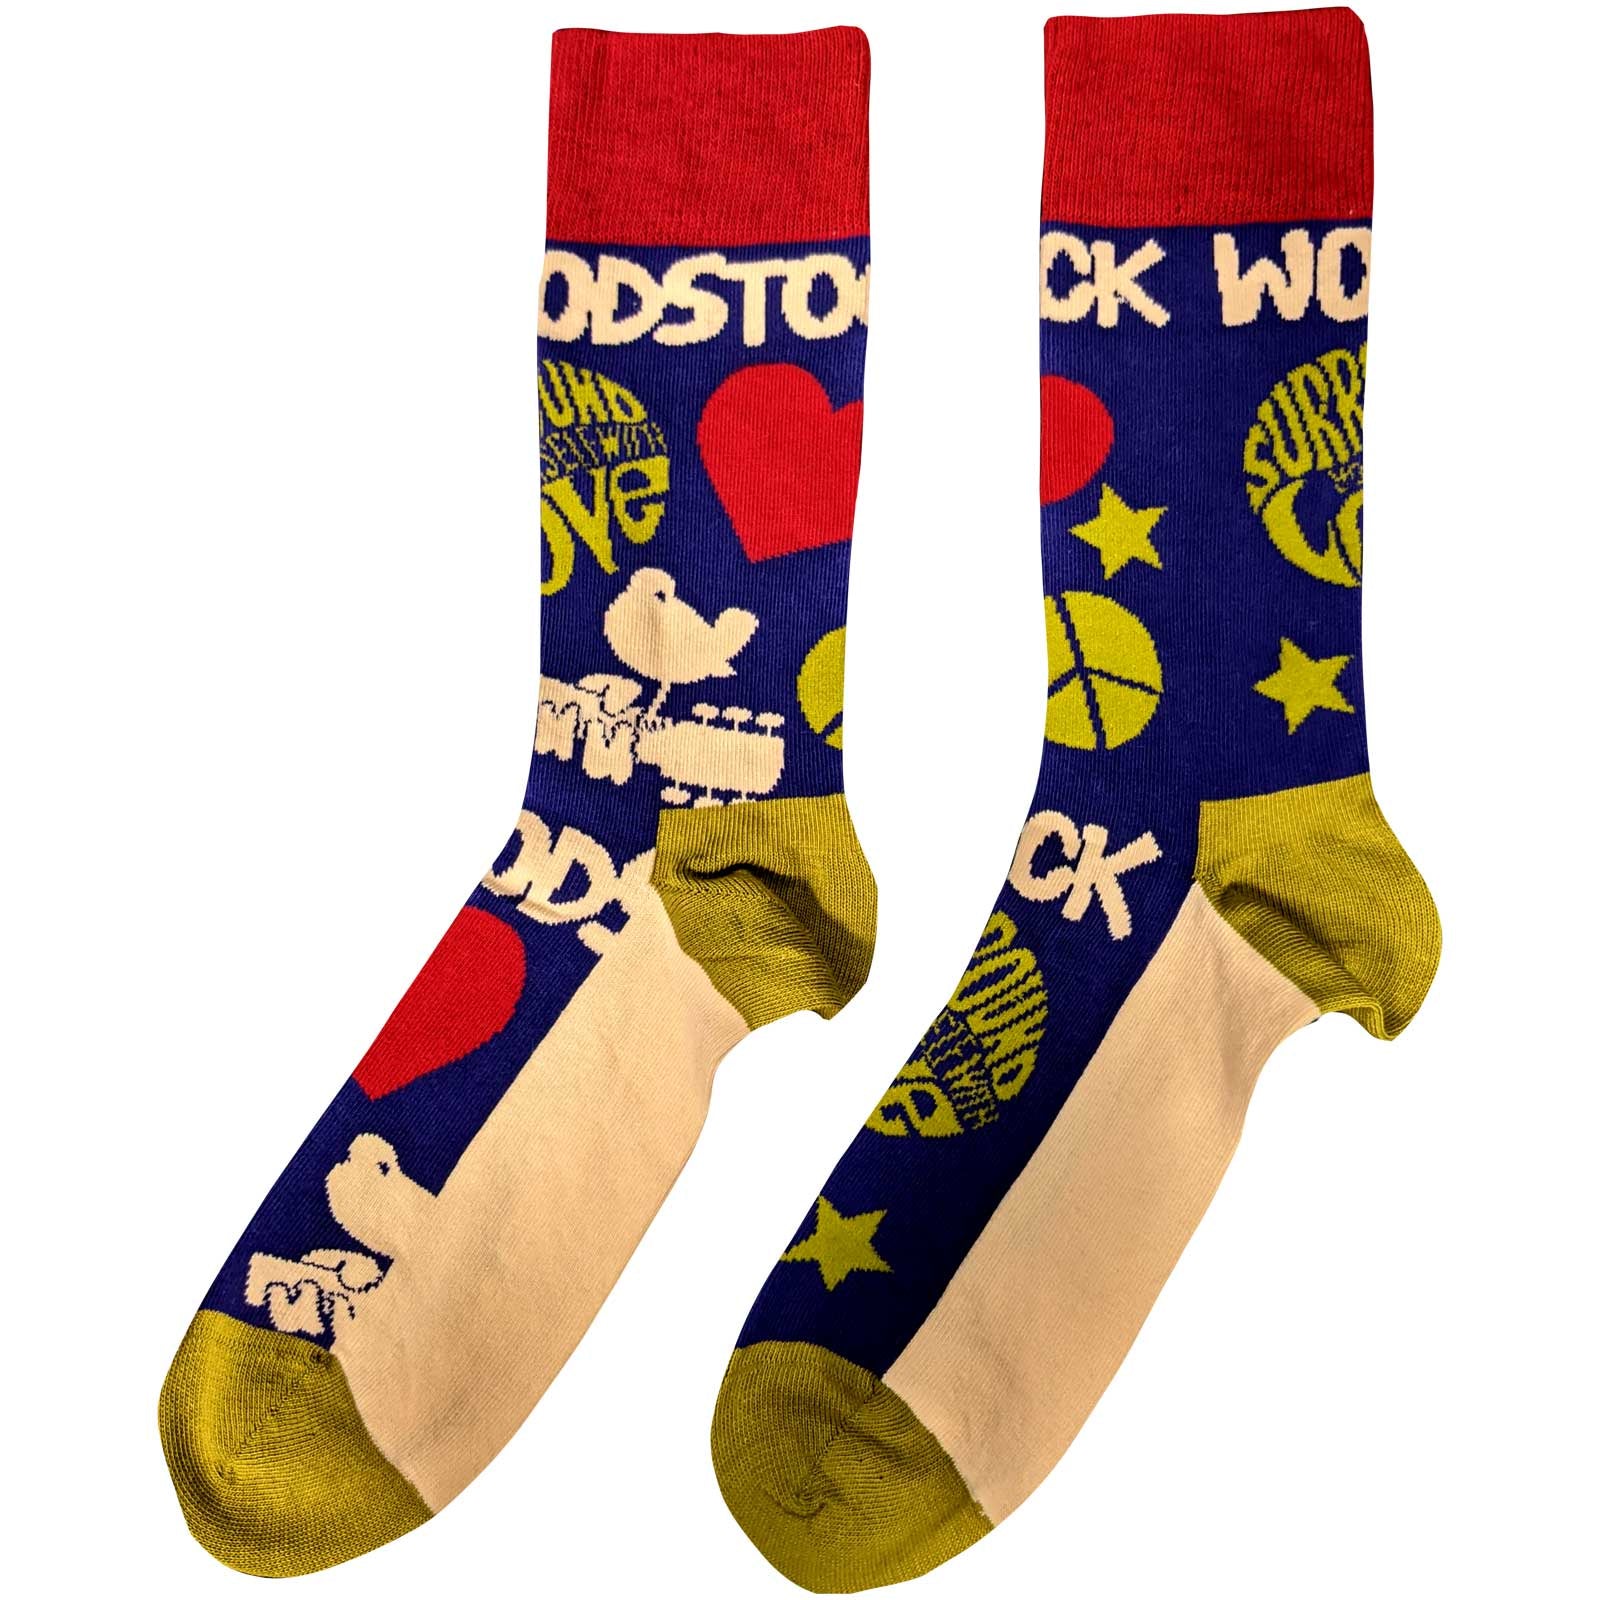 Woodstock - Surround Yourself Socks